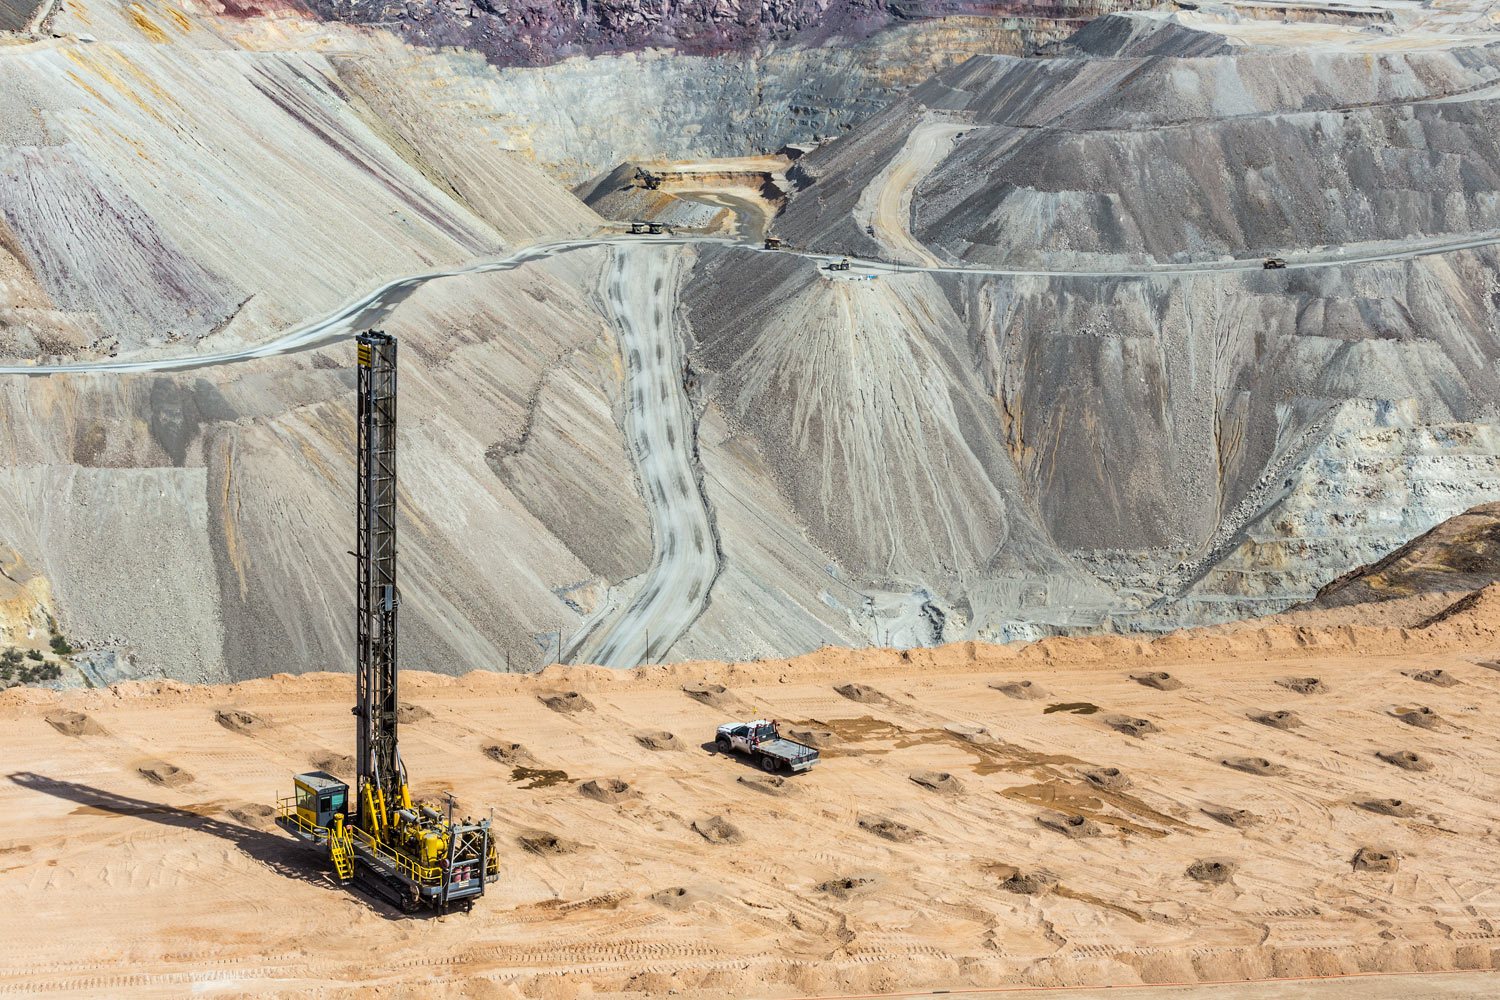 Asarco Pit Mine. Green Valley, AZ. Study #2. 2018 (331°58'27.228" N 111°4'6.264" W)